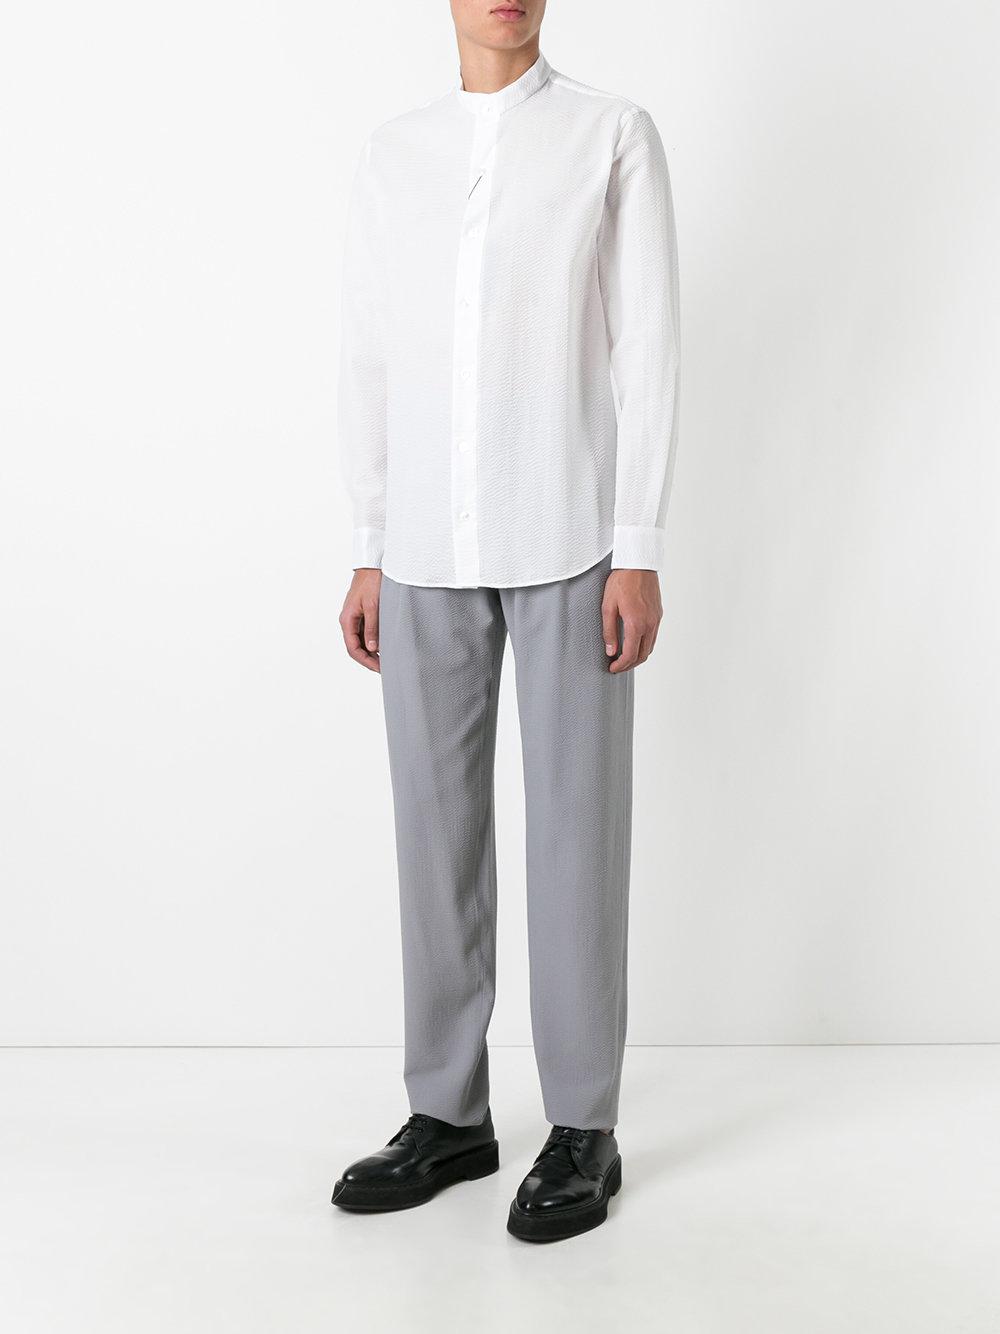 Lyst - Giorgio Armani Seersucker Mandarin Collar Shirt in White for Men